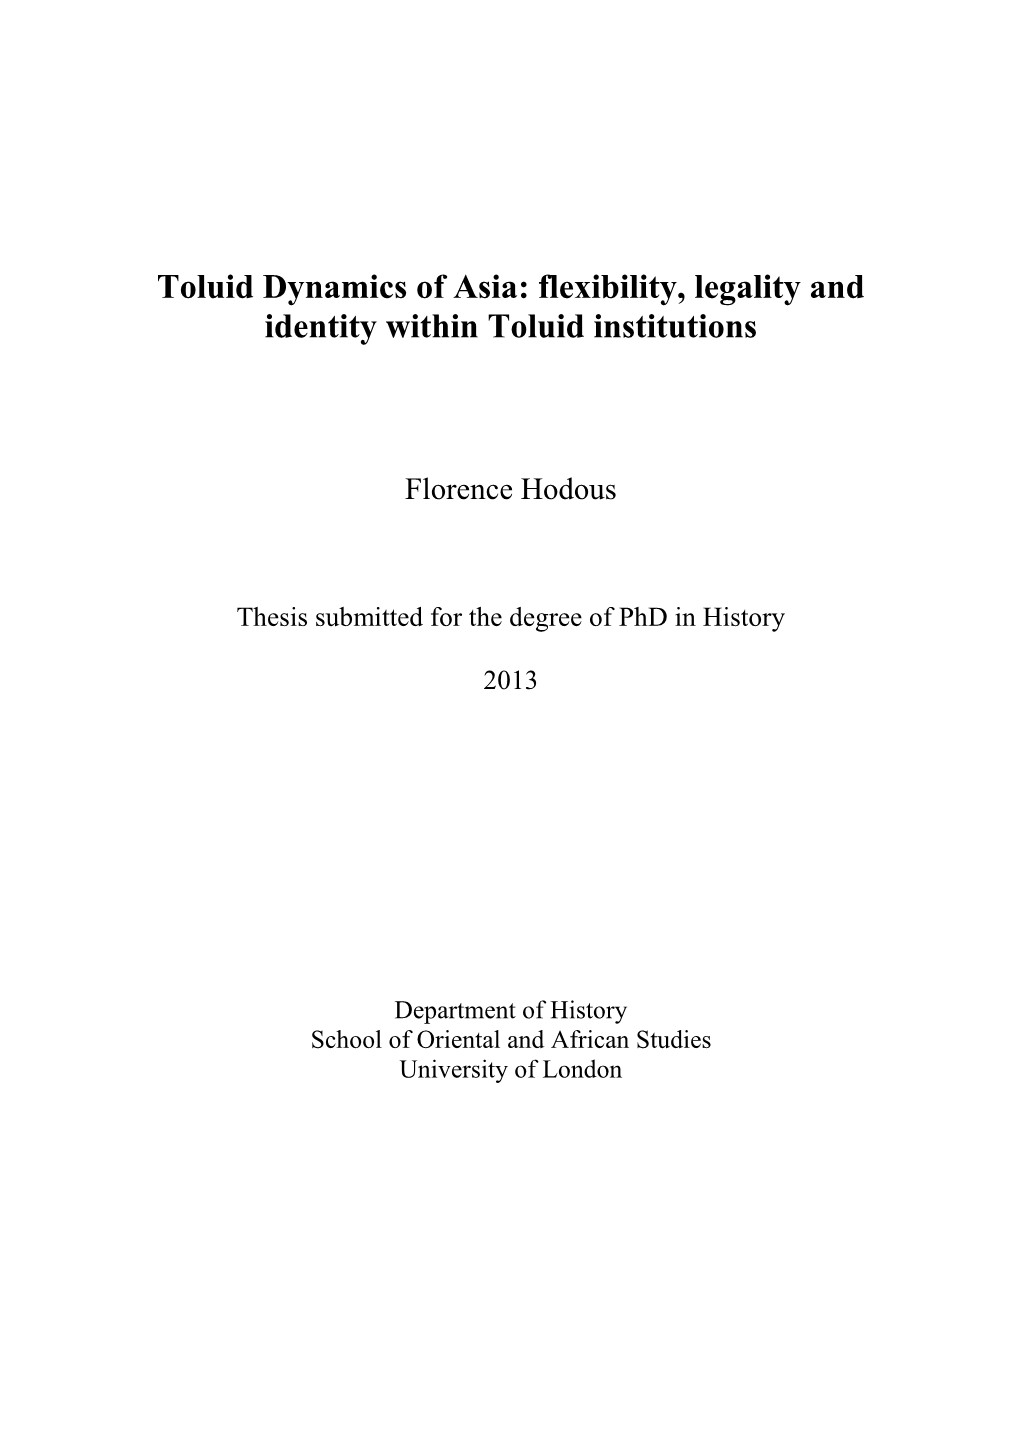 Phd 2013 F Hodous, Toluid Dynamics of Asia